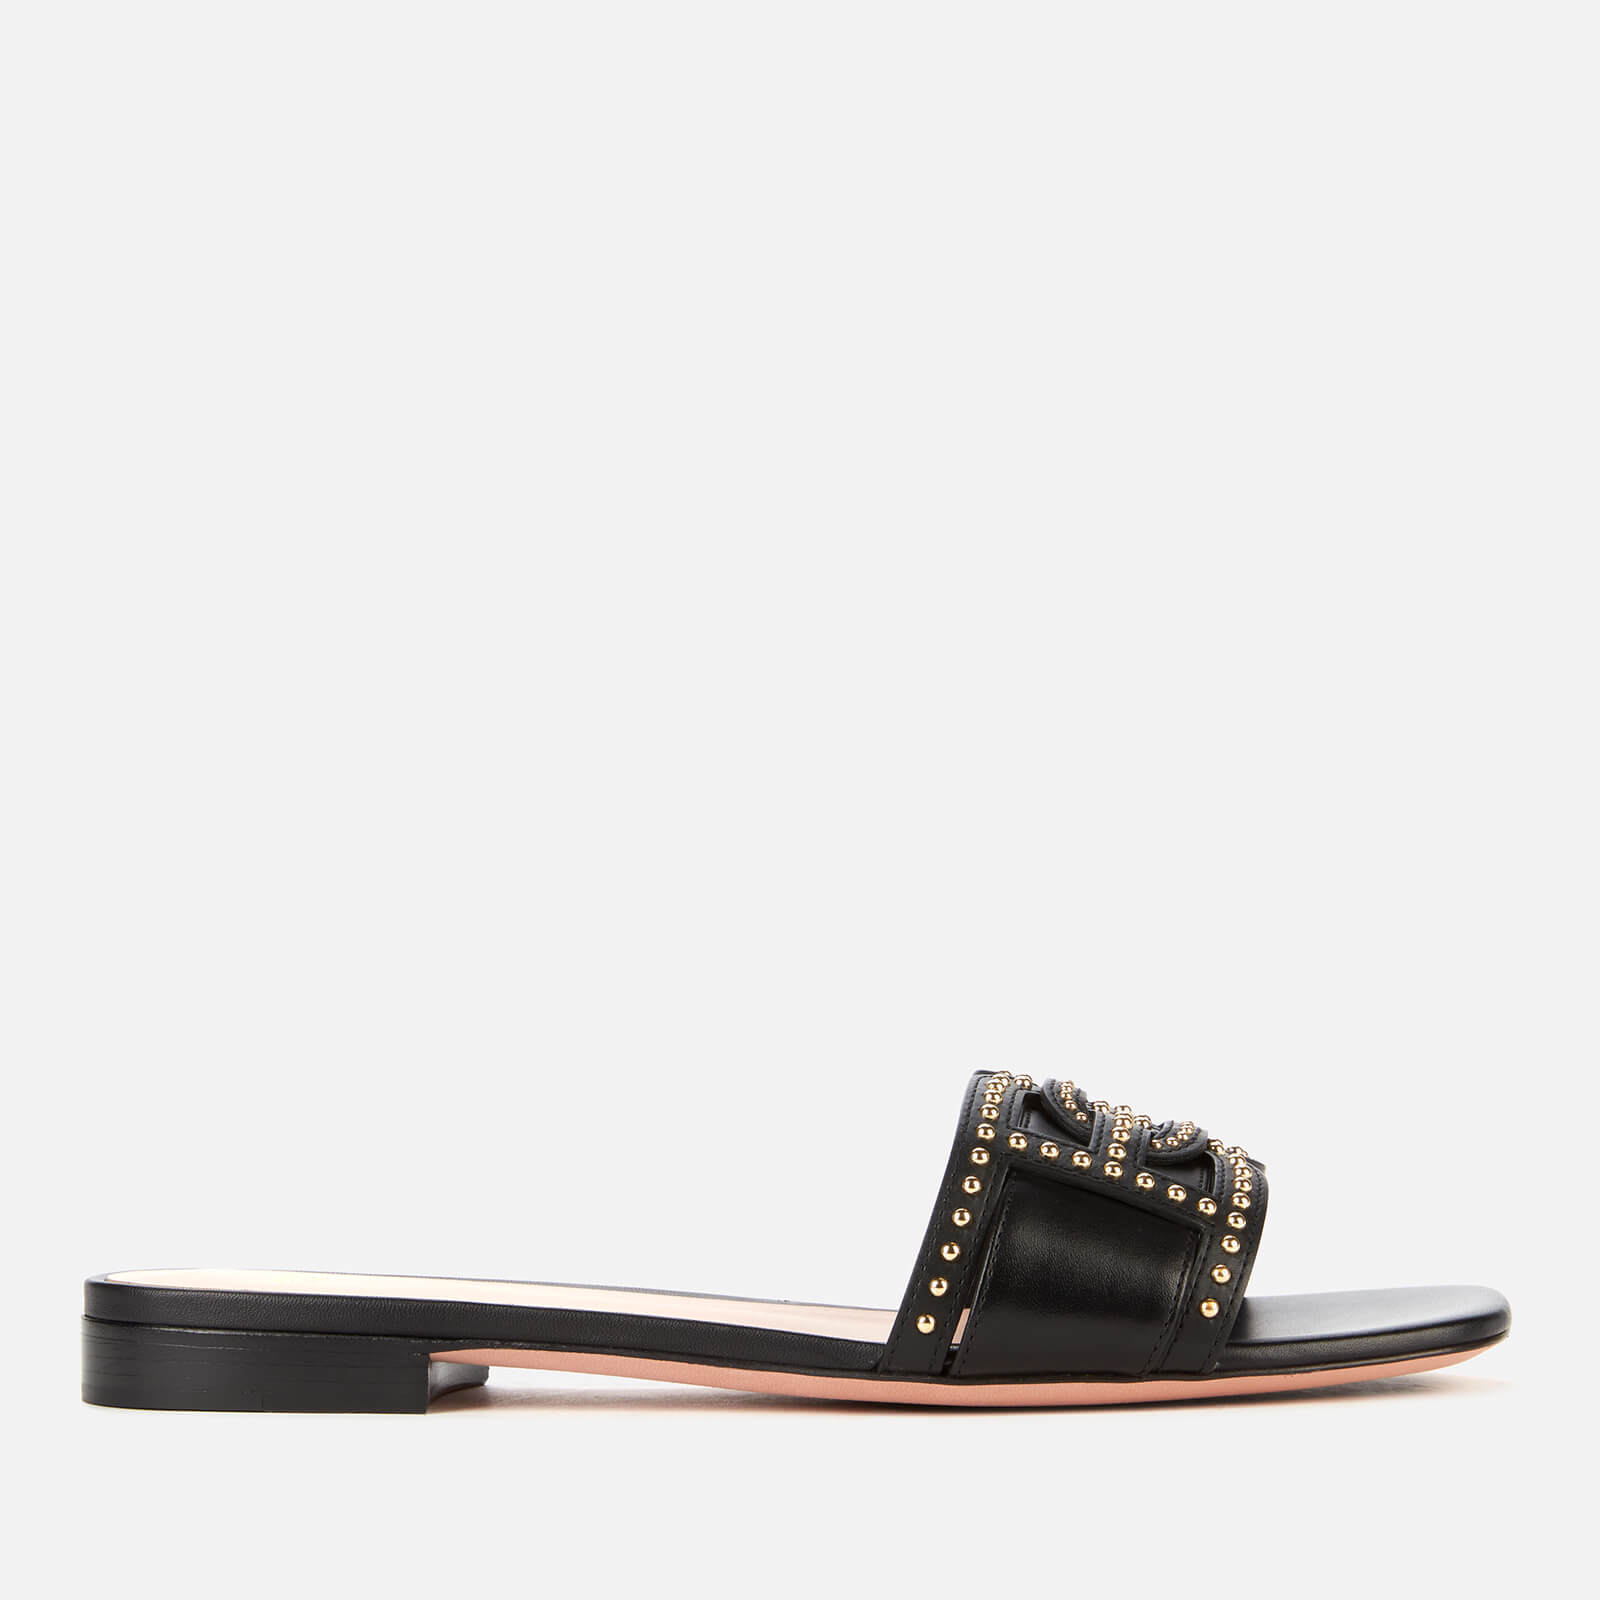 Bally Women's Peoni Leather Flat Sandals - Black - UK 3